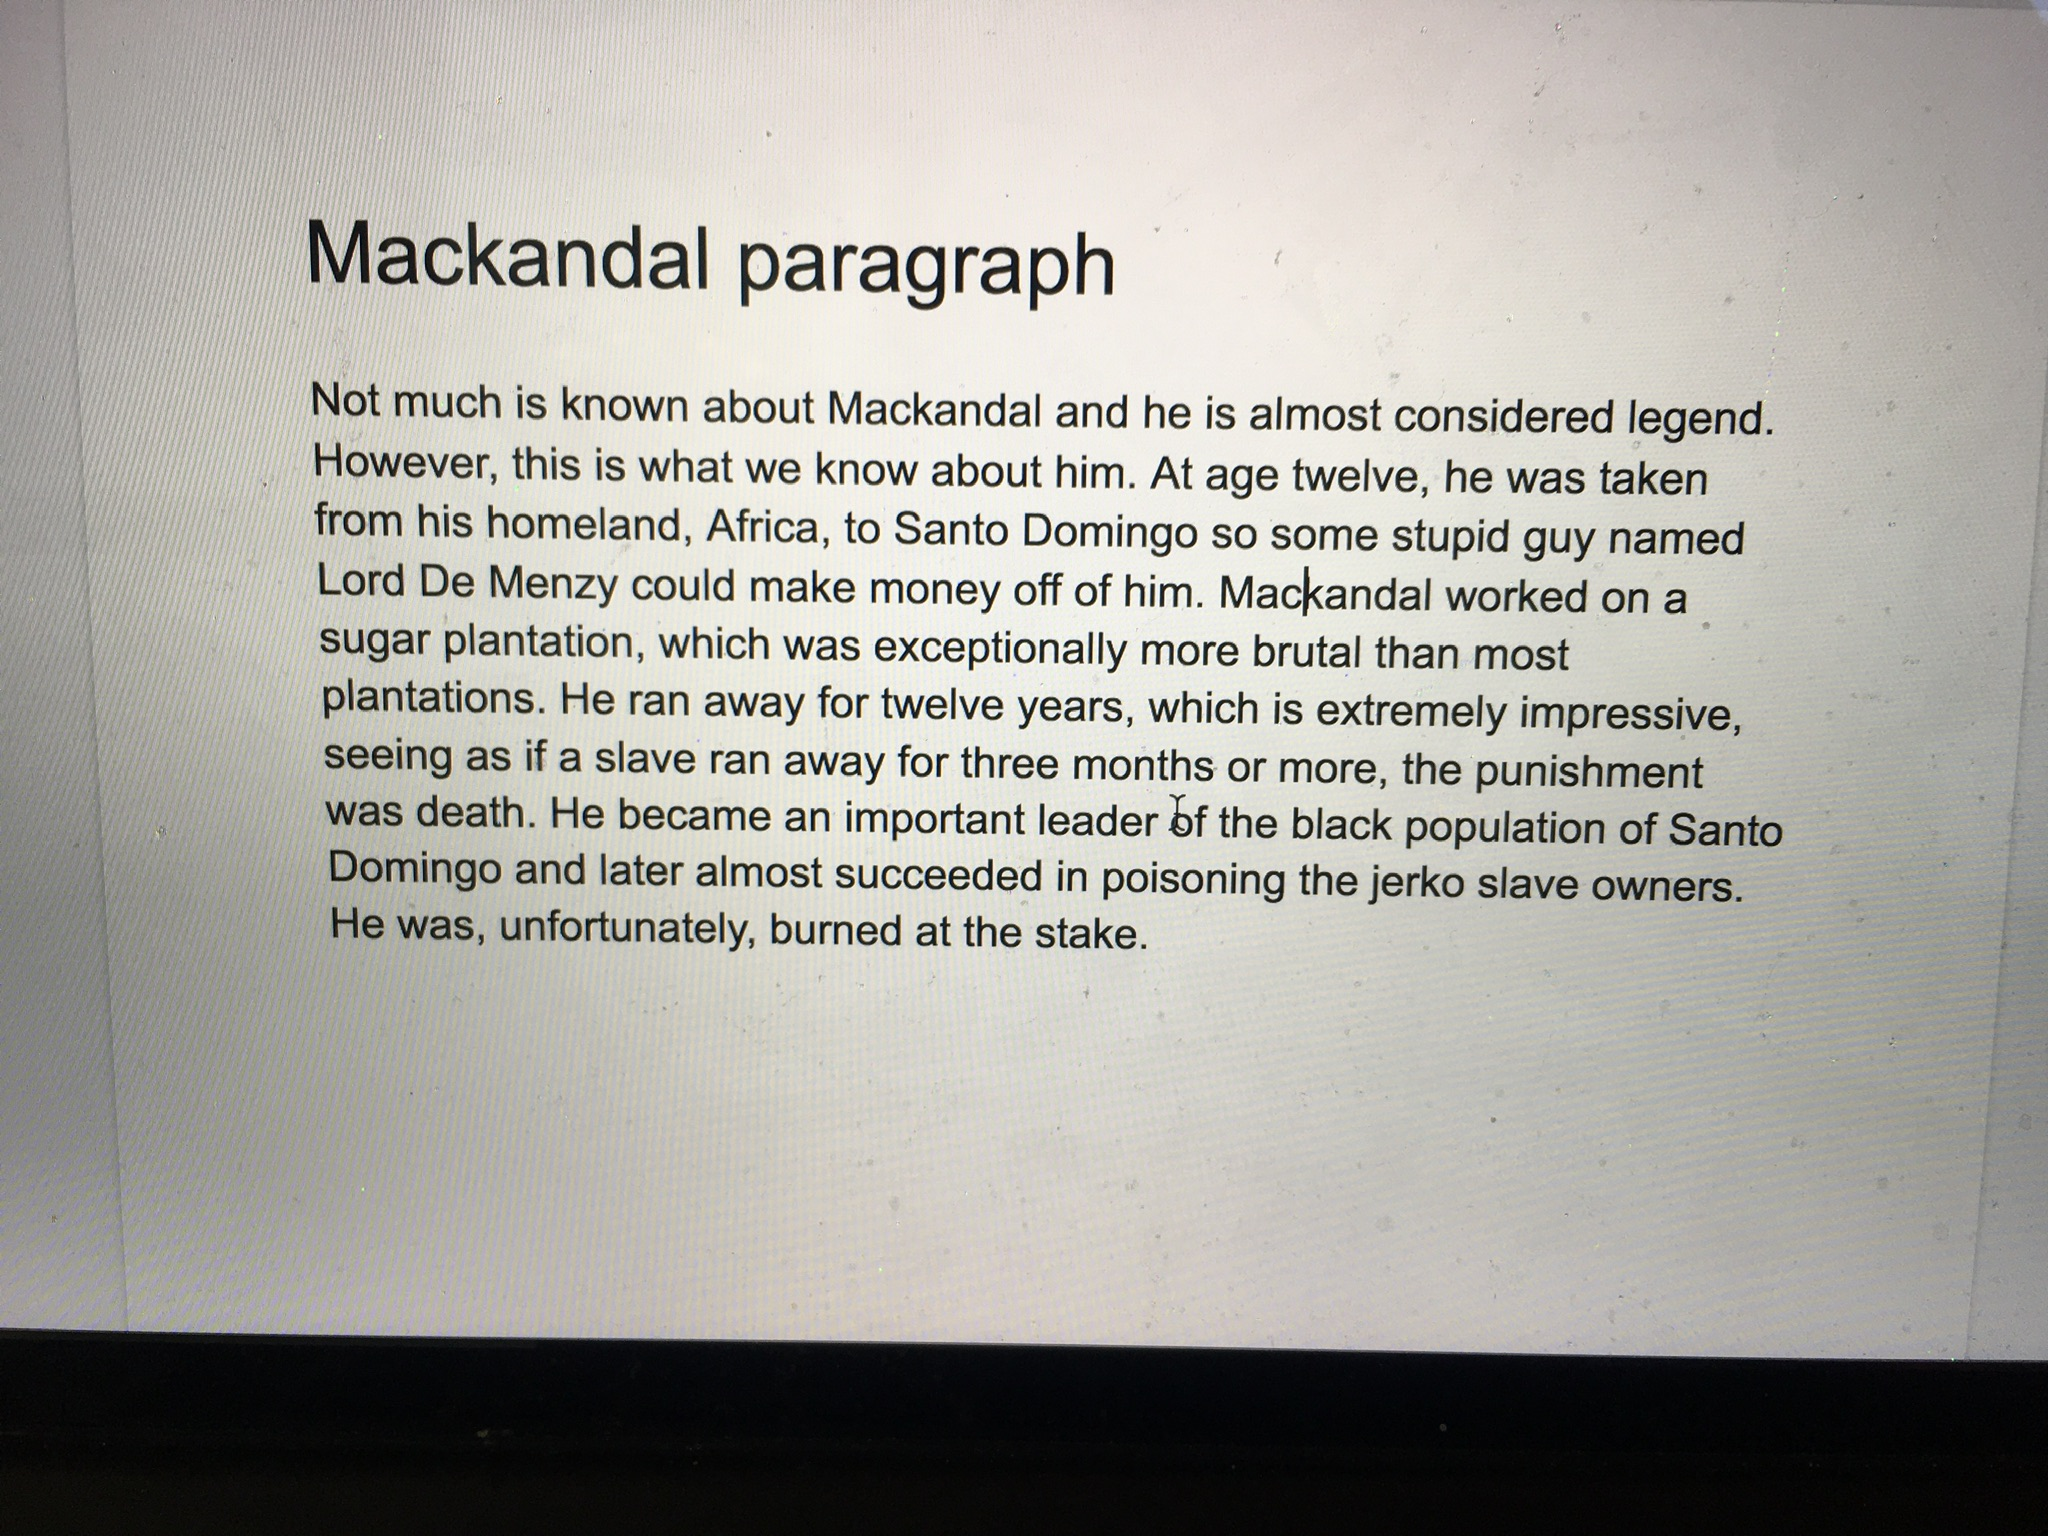 The first draft of Wanda's Mackandal paragraph